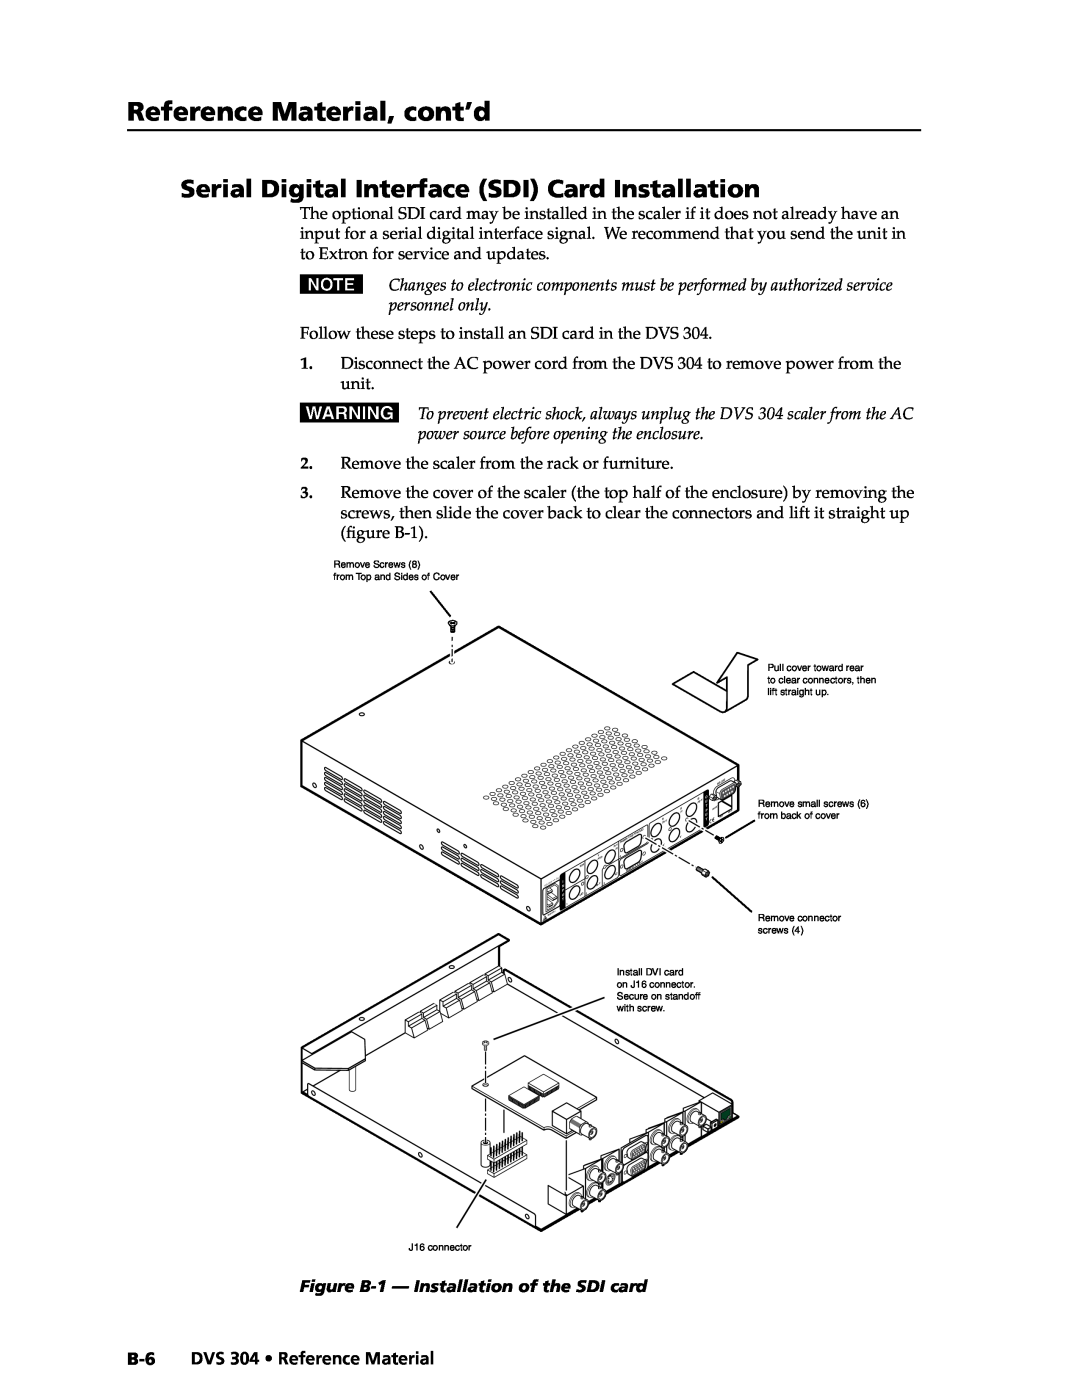 Extron electronic DVS 304 AD Serial Digital Interface SDI Card Installation, Figure B-1- Installation of the SDI card 